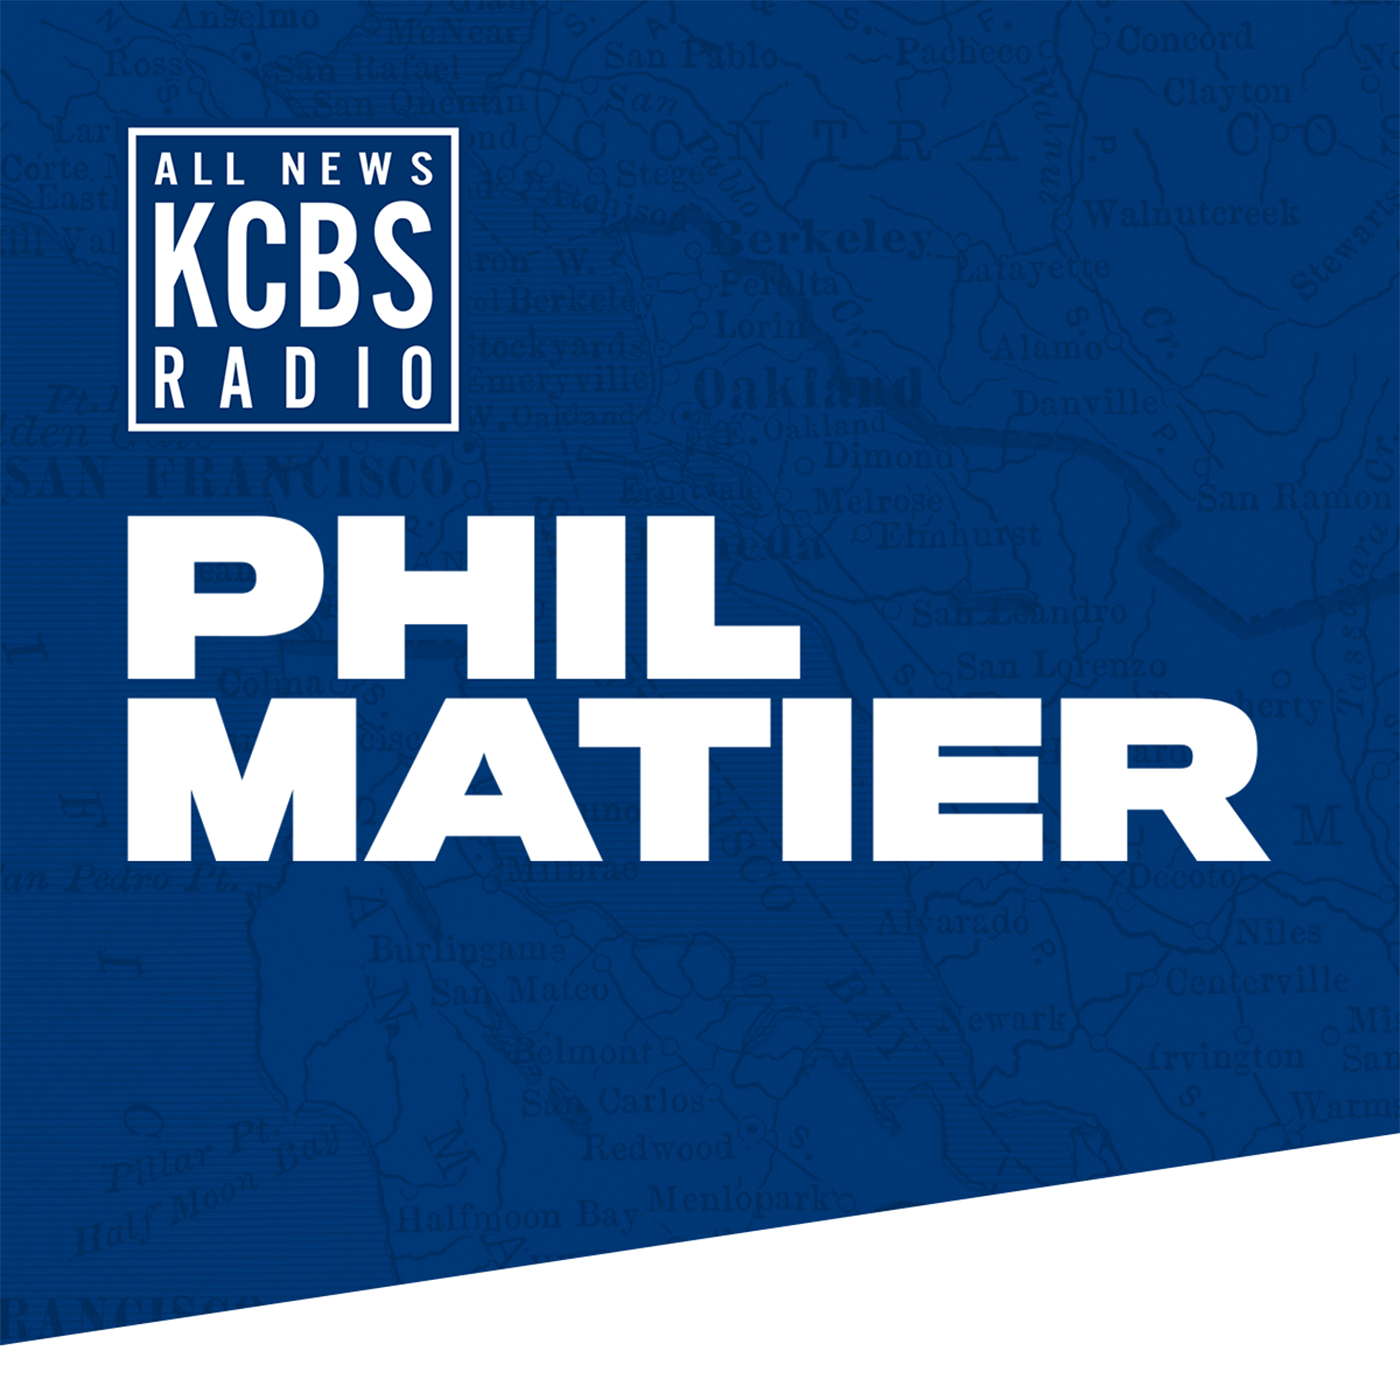 Phil Matier: Governor Newsom Admonishes Handling of US Postal Service